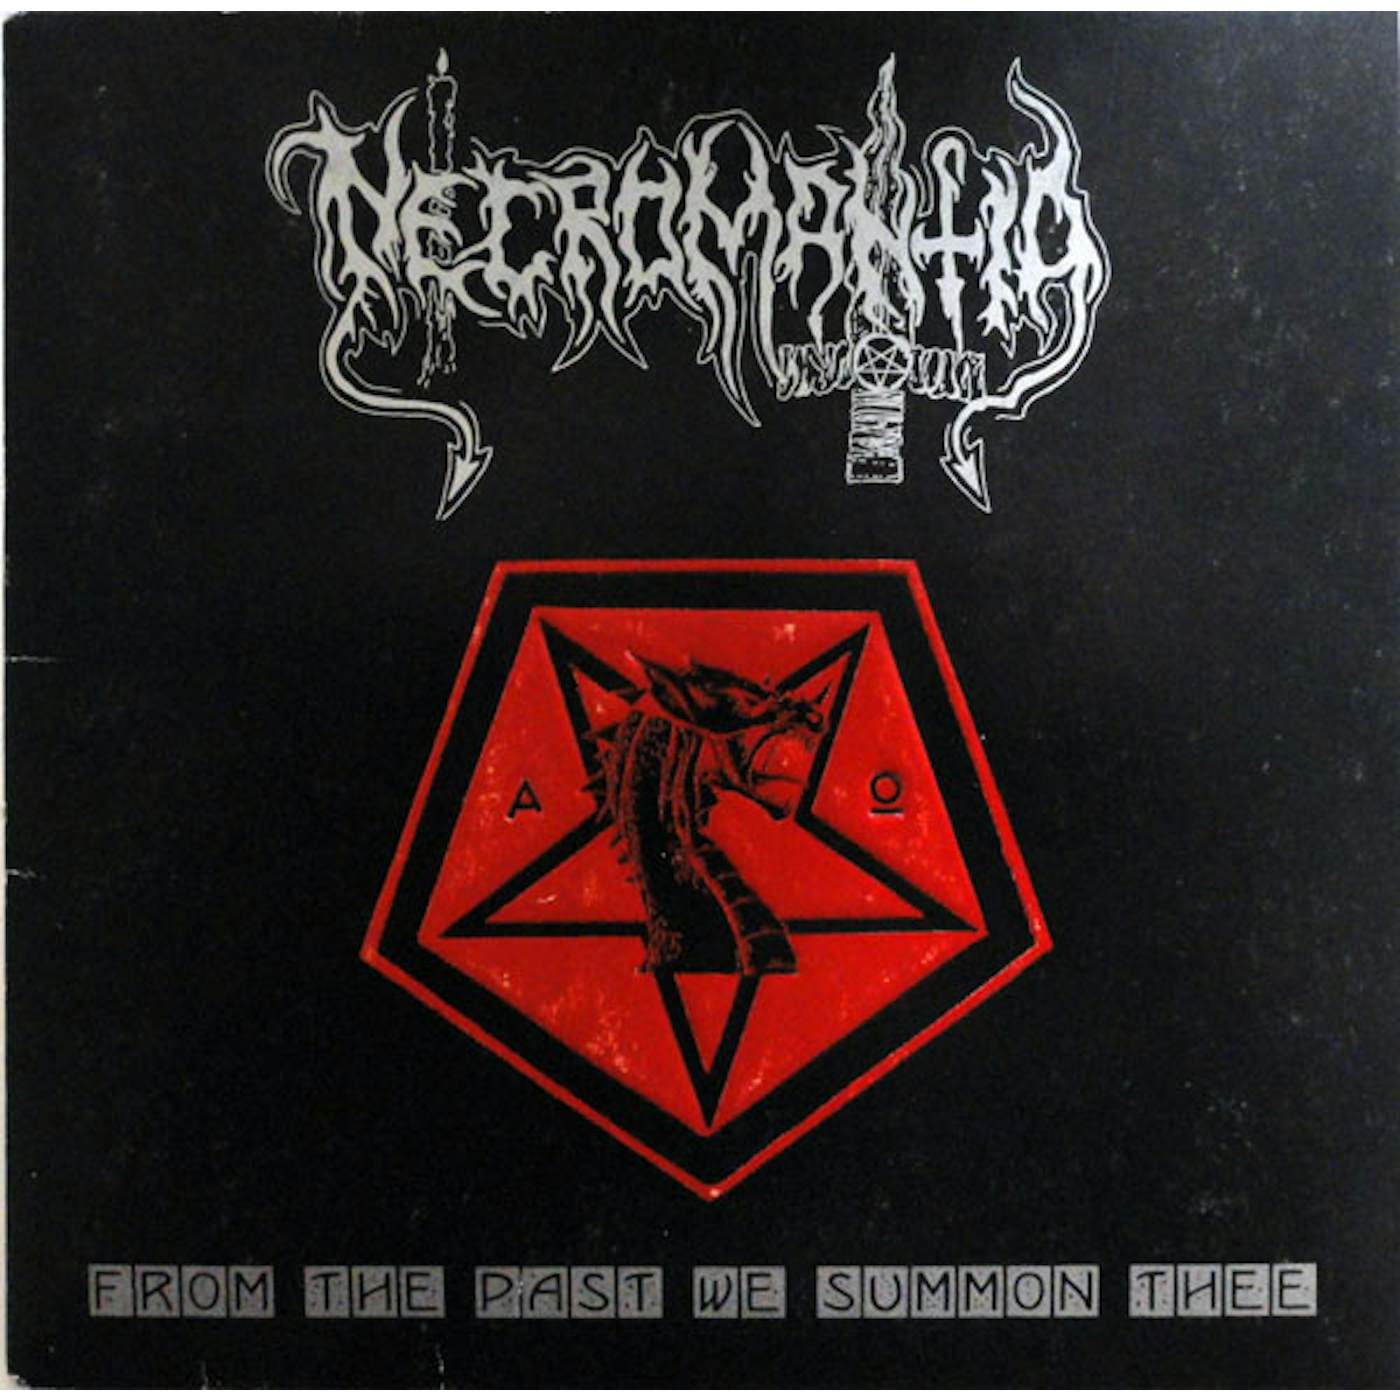 Necromantia From The Past We Summon Thee Vinyl Record